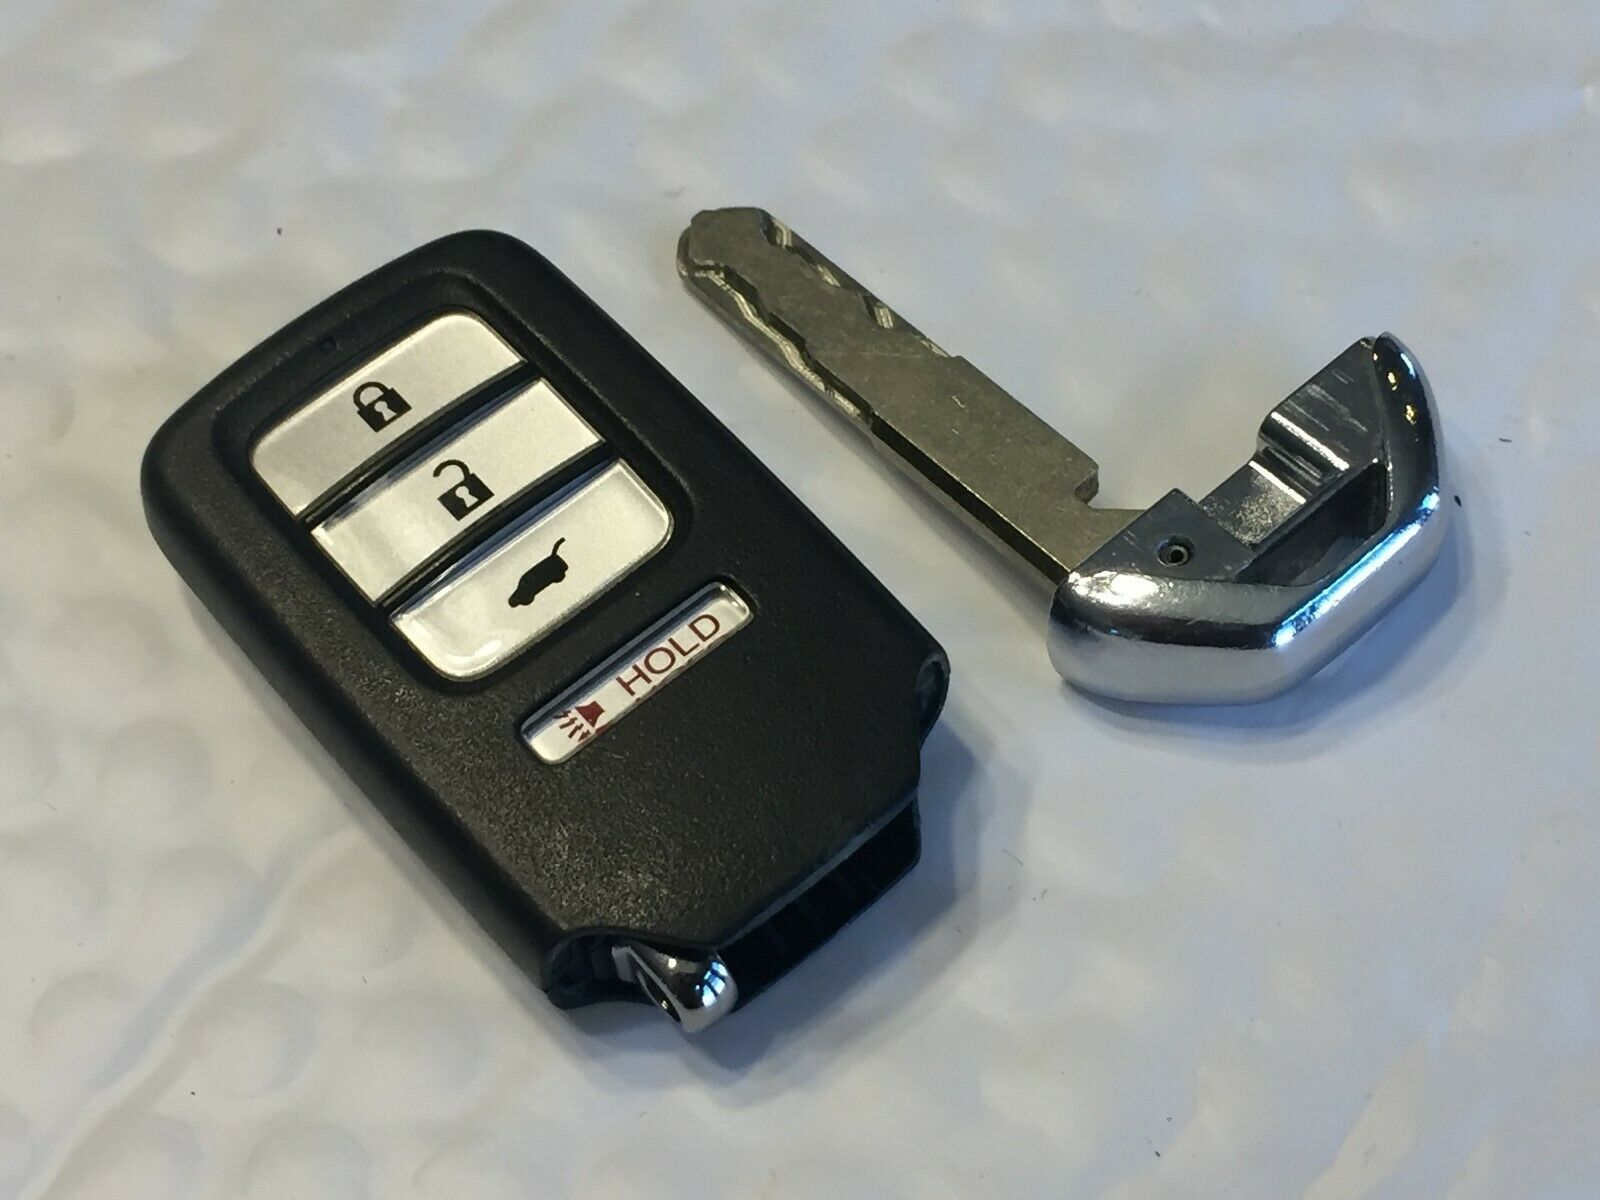 Honda Keyless Entry Remote Fob Acj932hk1210a 4 Buttons - Oemusedautoparts1.com